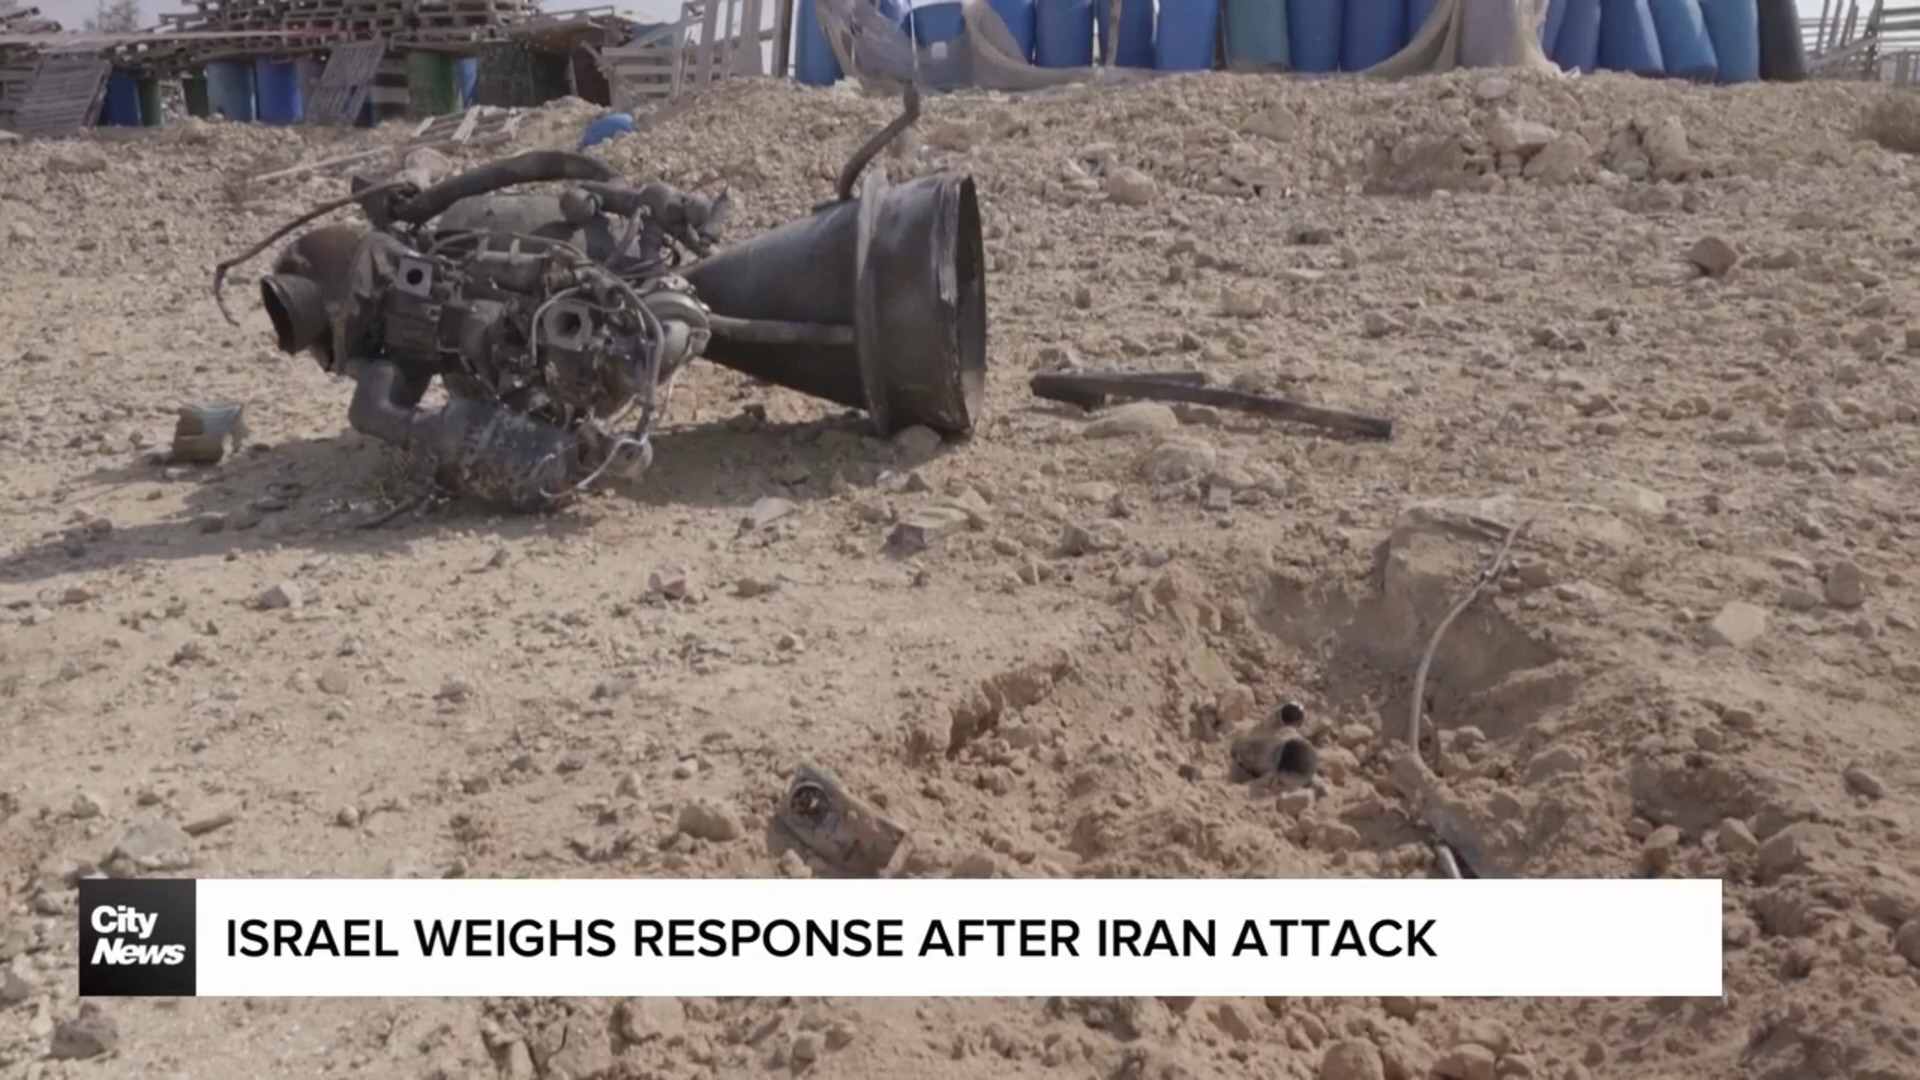 Western officials urge Israel to not retaliate after unprecedented Iranian attack